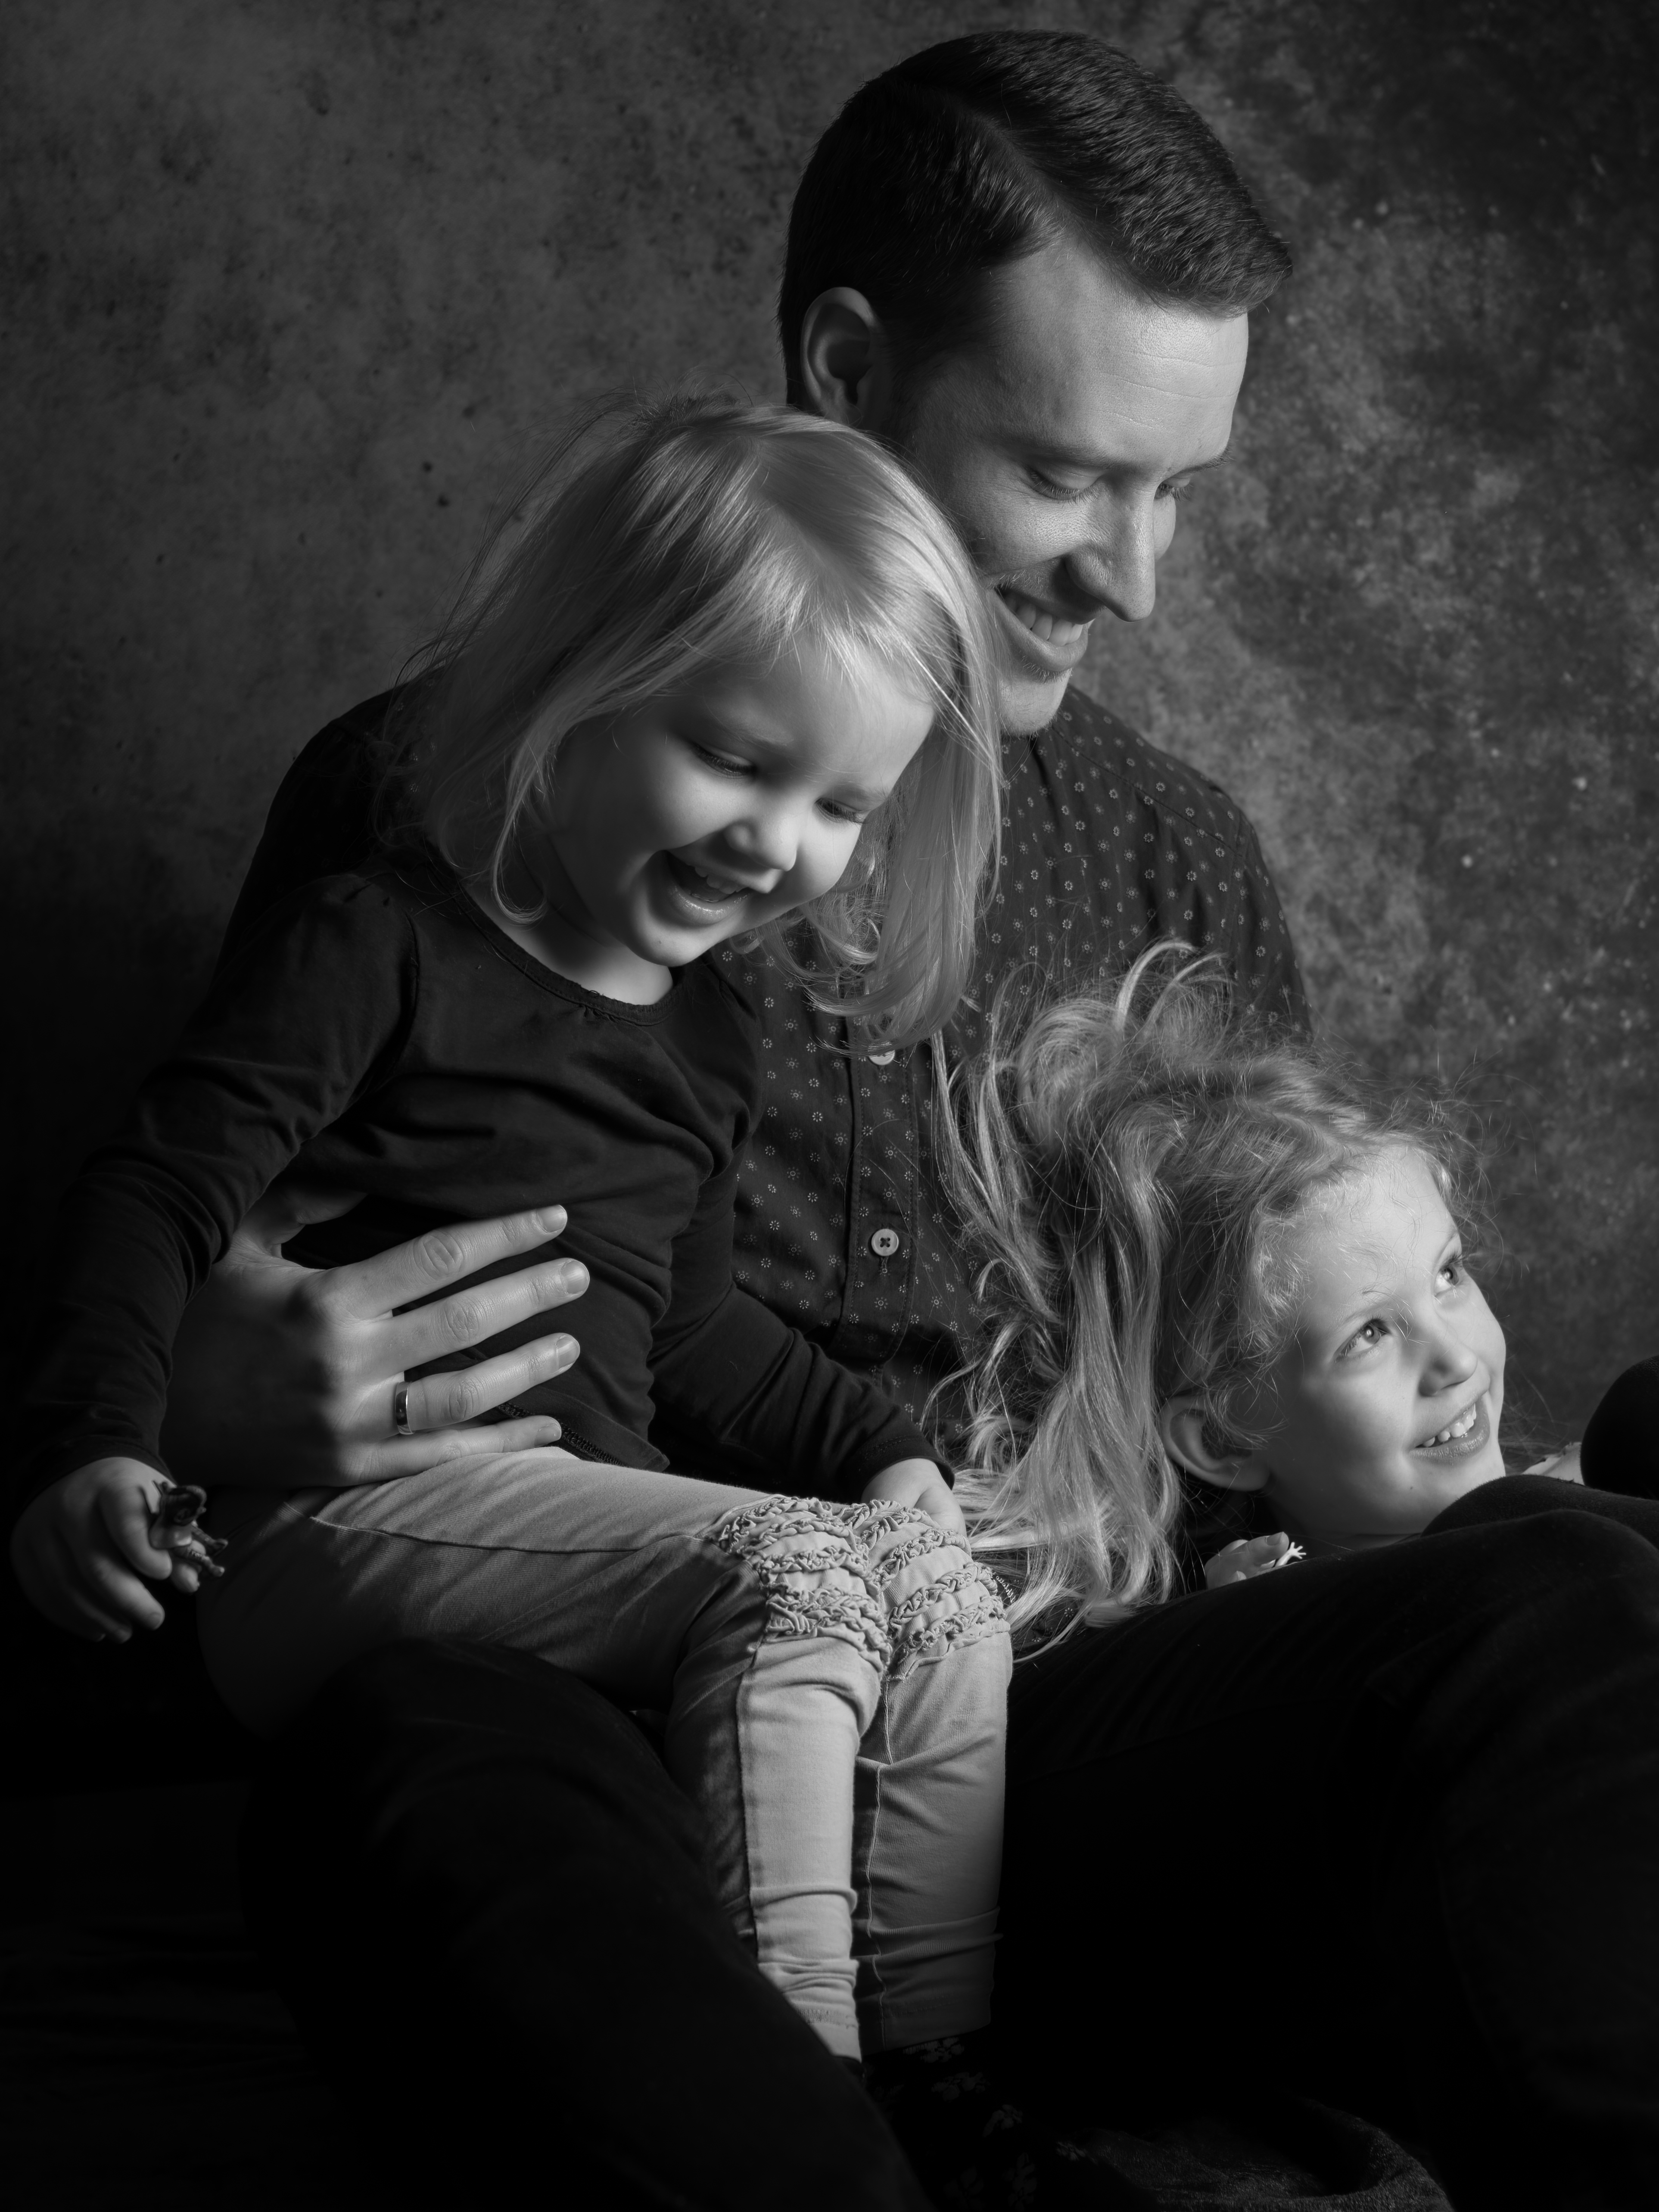 Familjefotografering av Fotograf Langes Fotografering i Motala Östergötland.